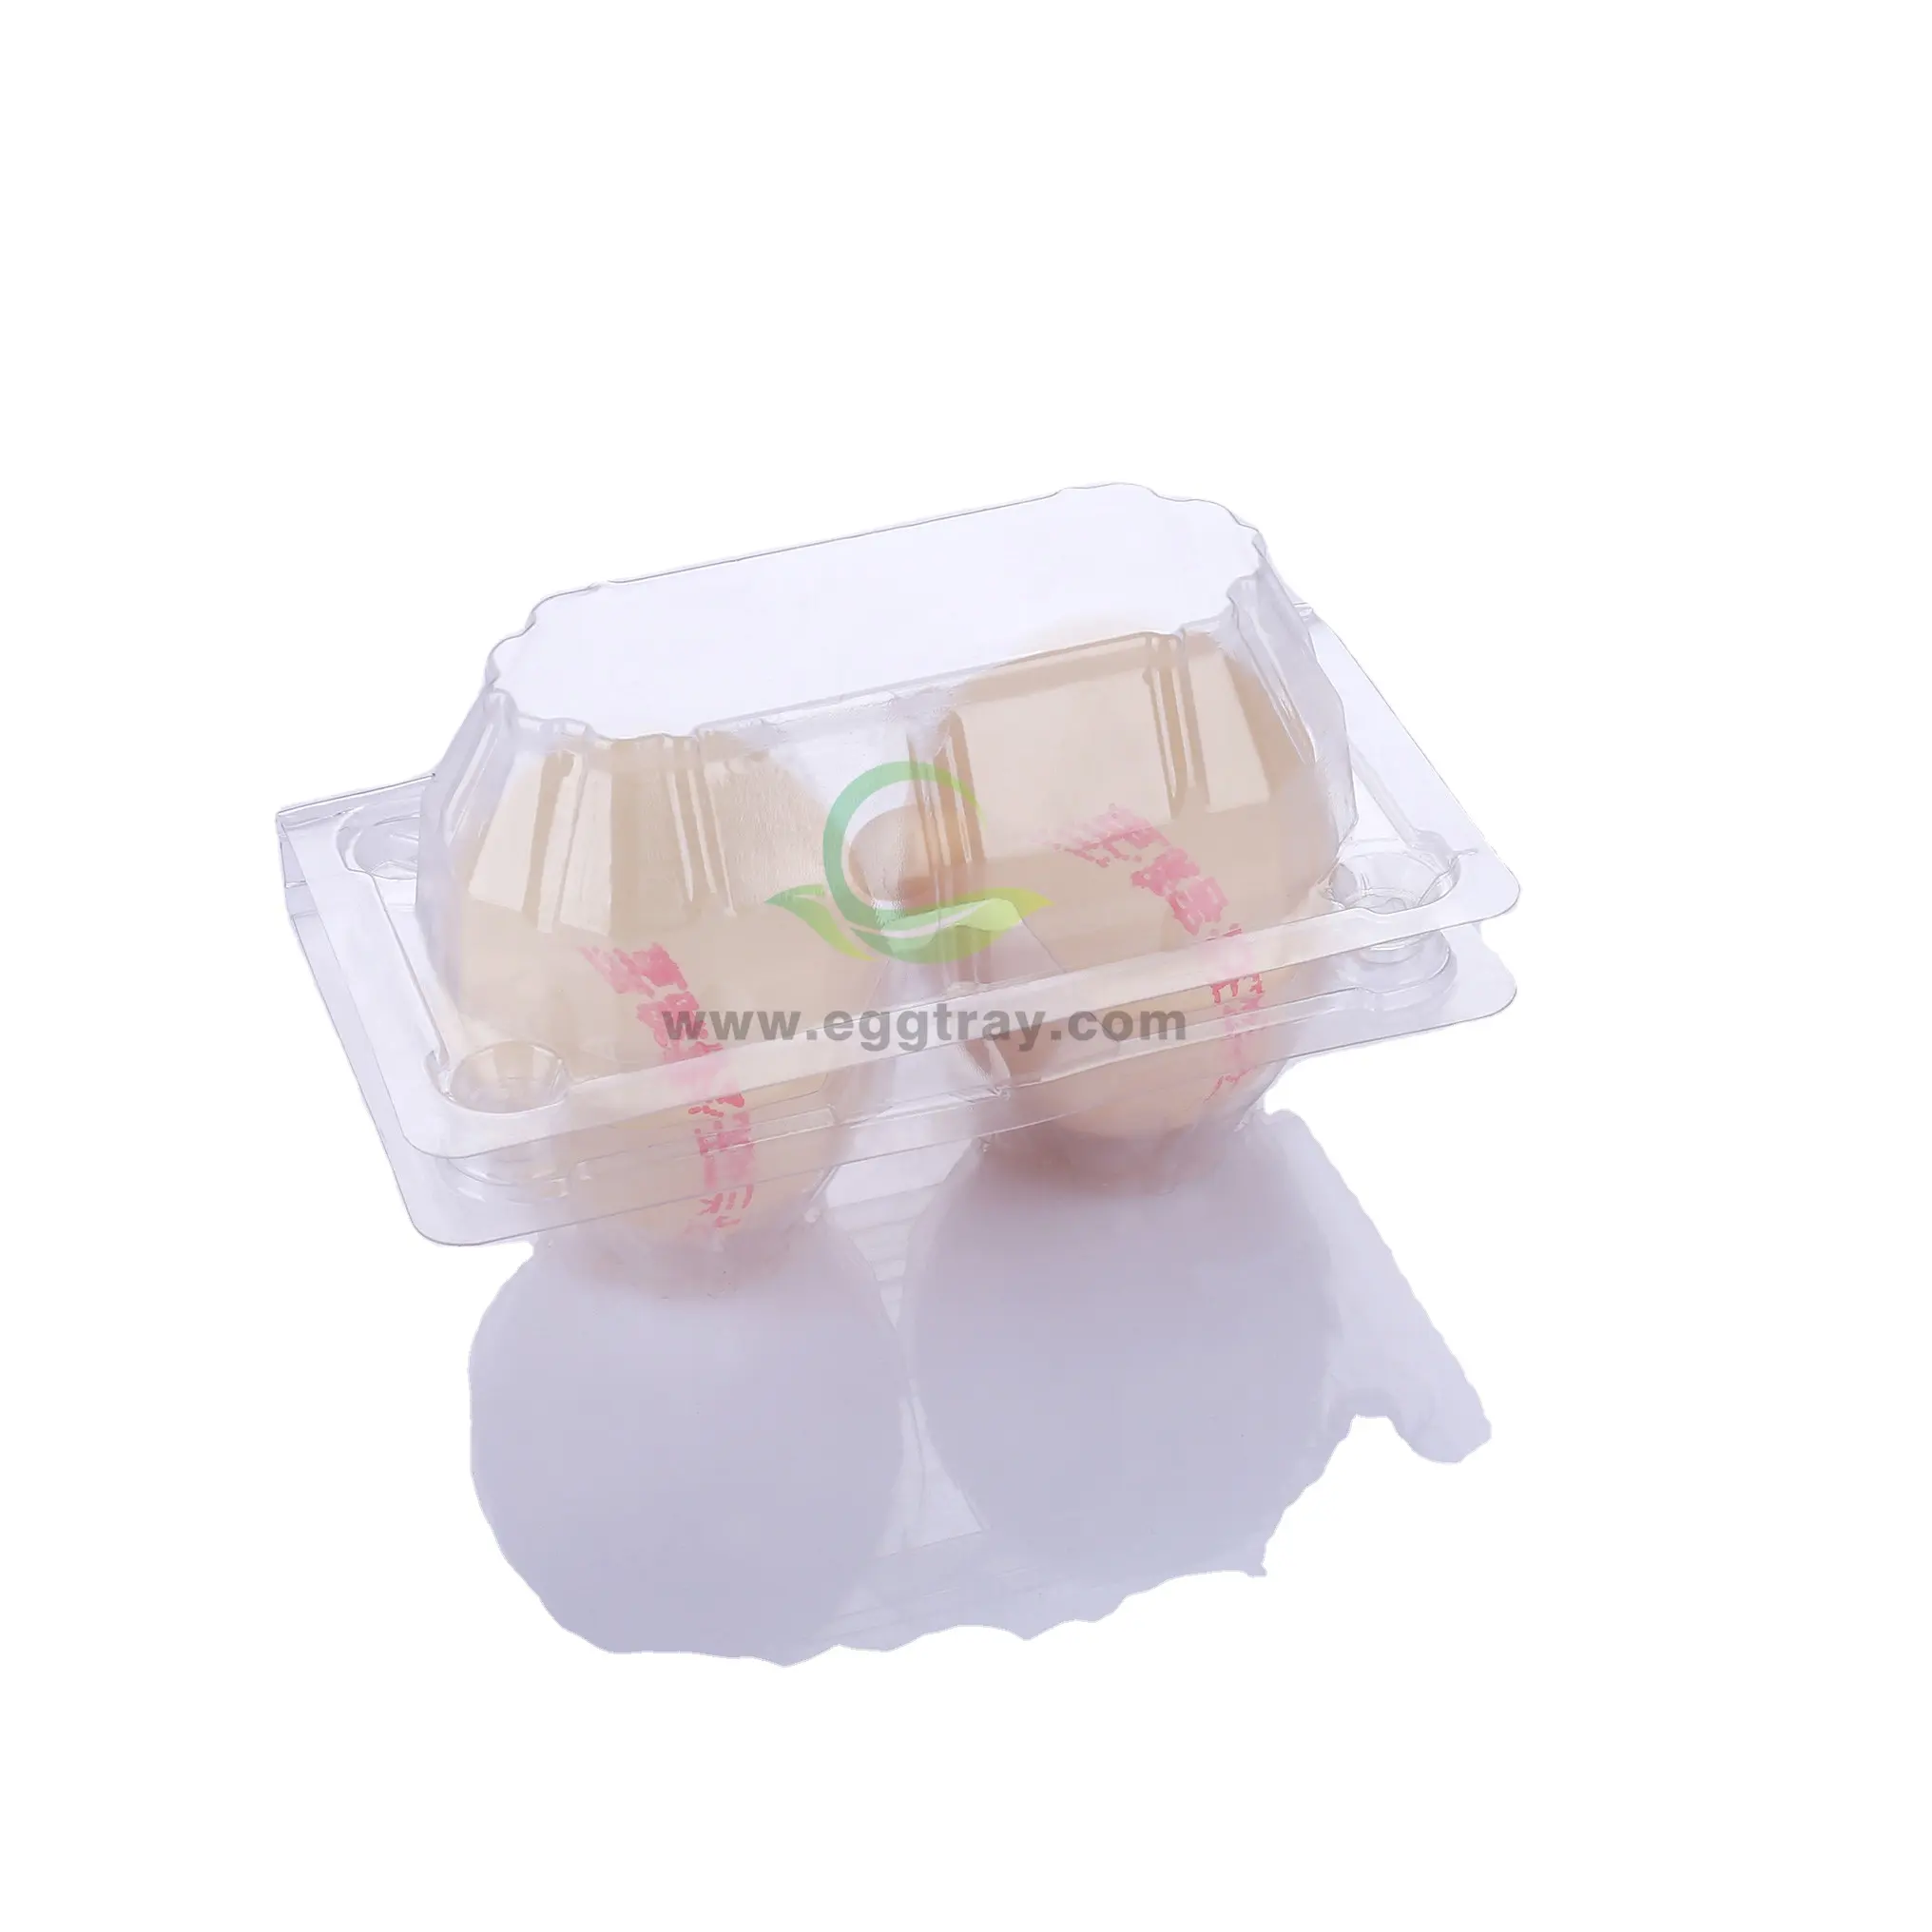 Bandeja plástica transparente para ovos, bandeja para ovos personalizada, 2 pacotes, recipiente para armazenar